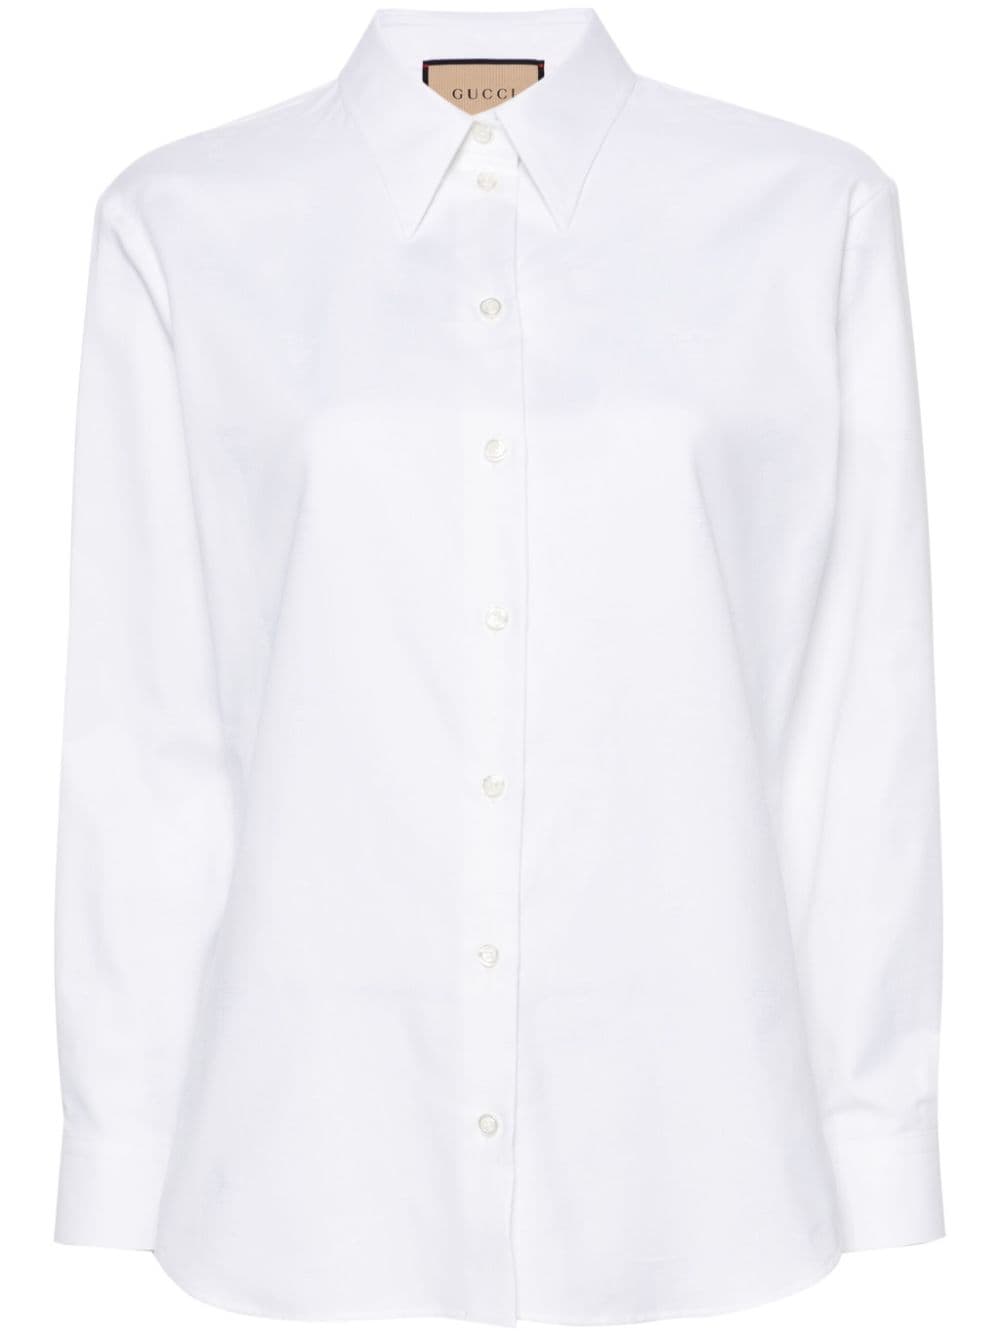 Gucci button cotton shirt - White von Gucci